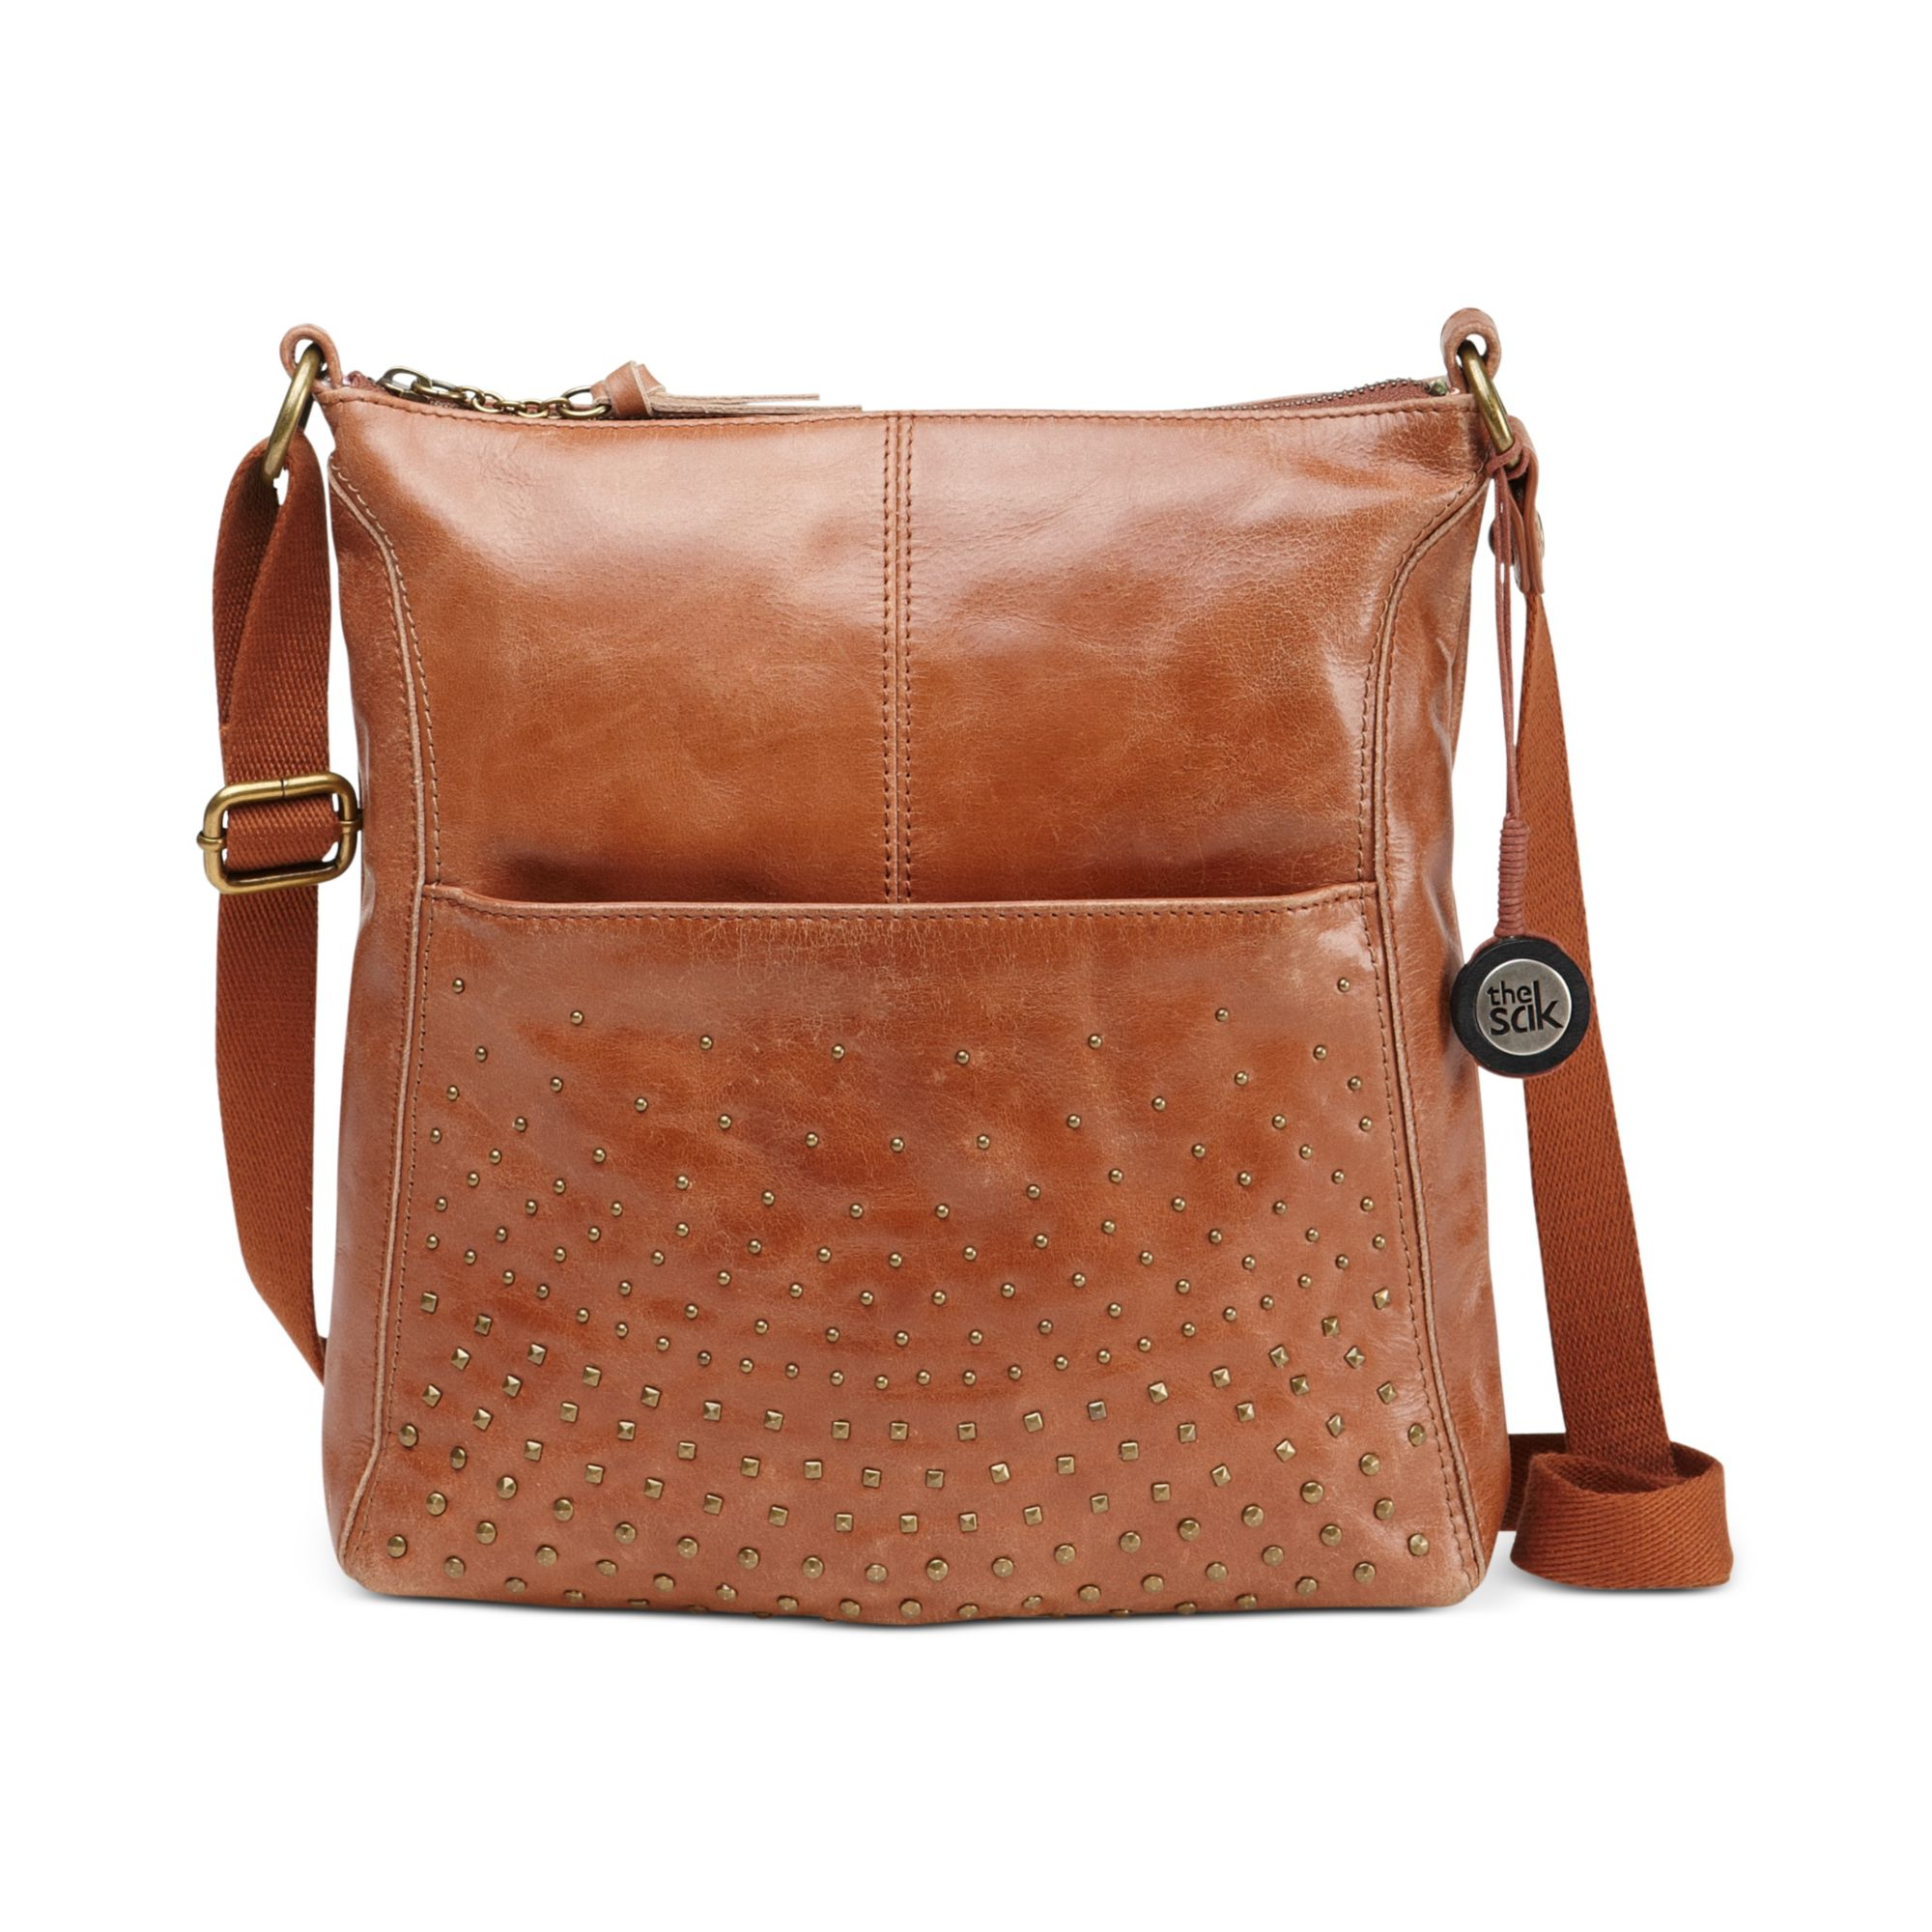 Lyst - The Sak Iris Leather Crossbody Bag in Brown